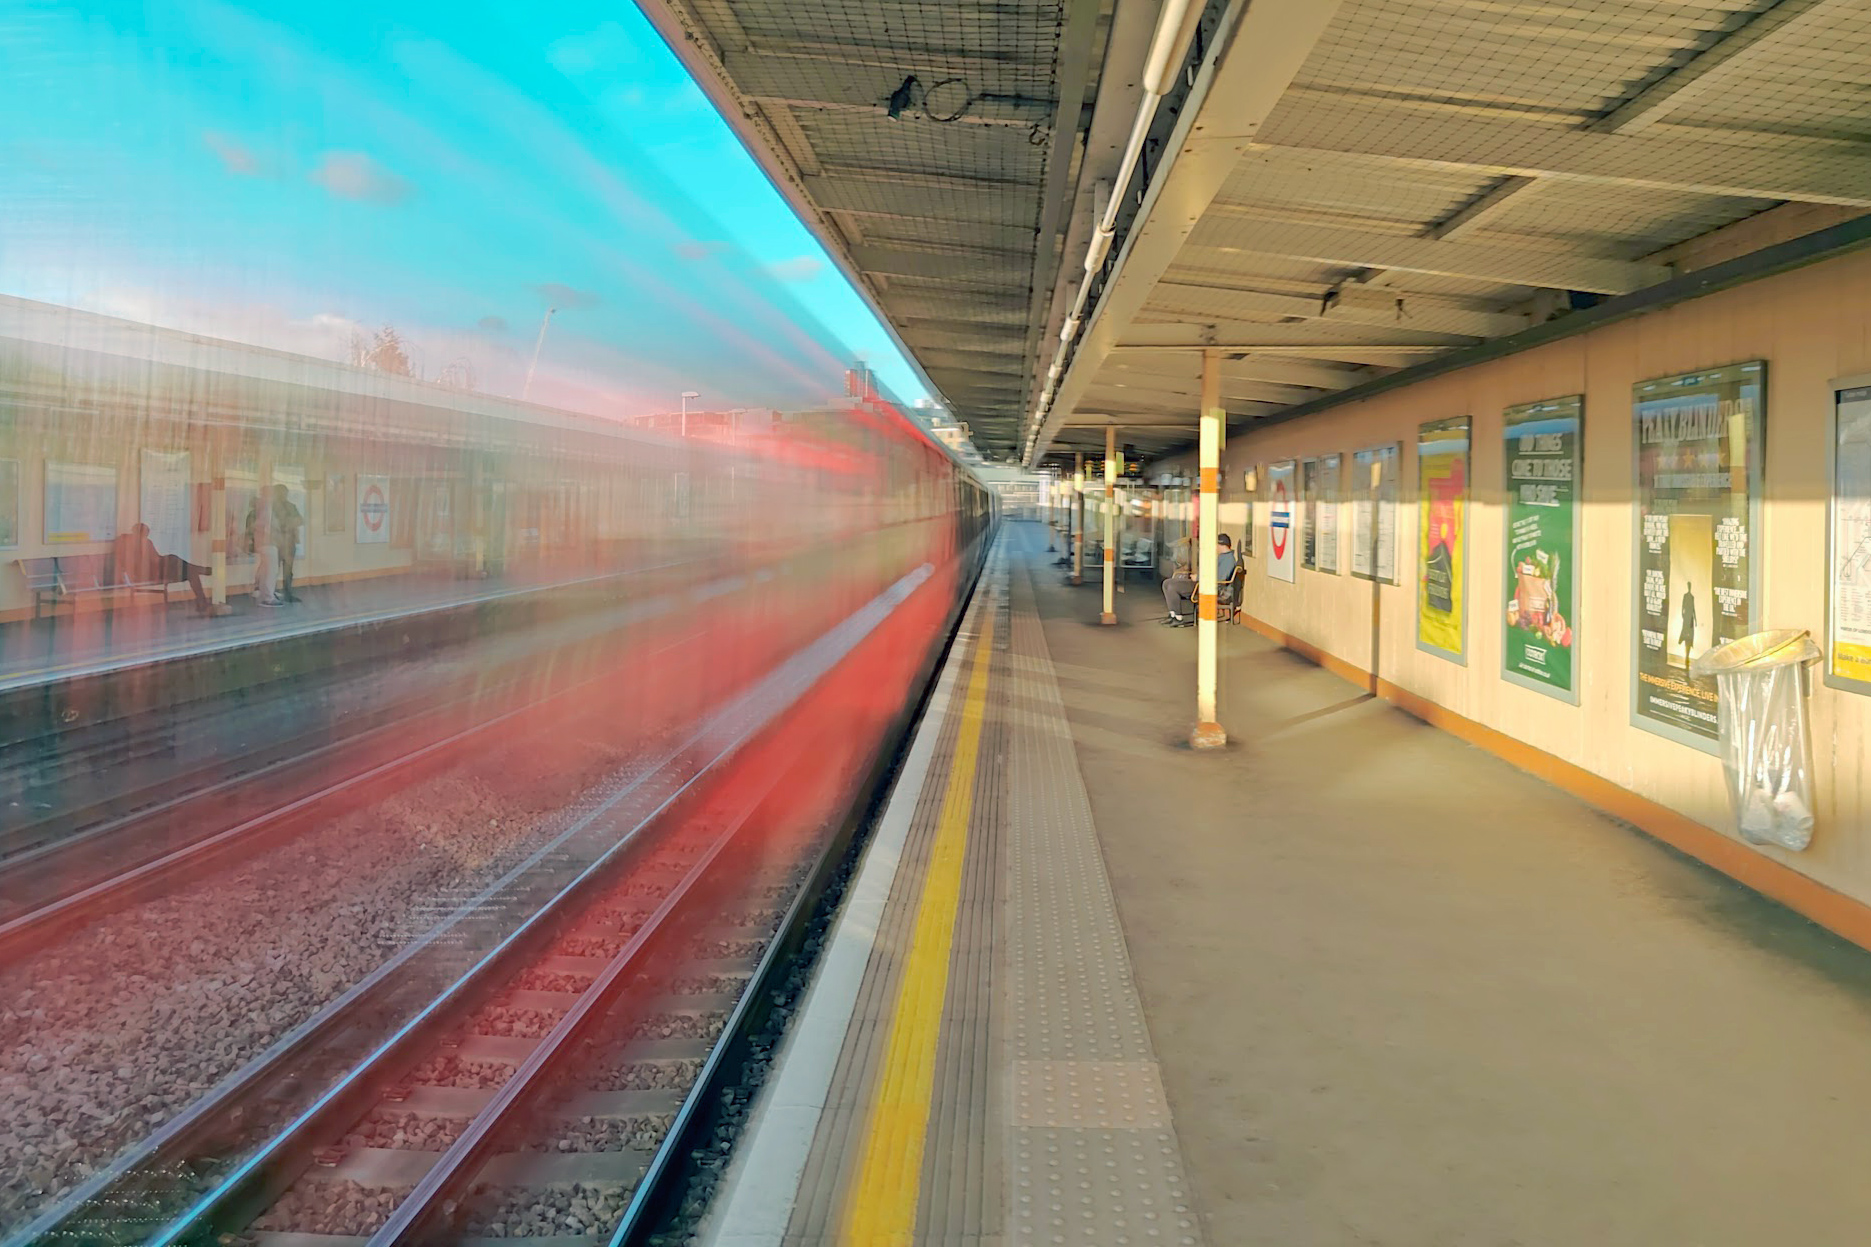 A photo of a blurred underground train running through a station.